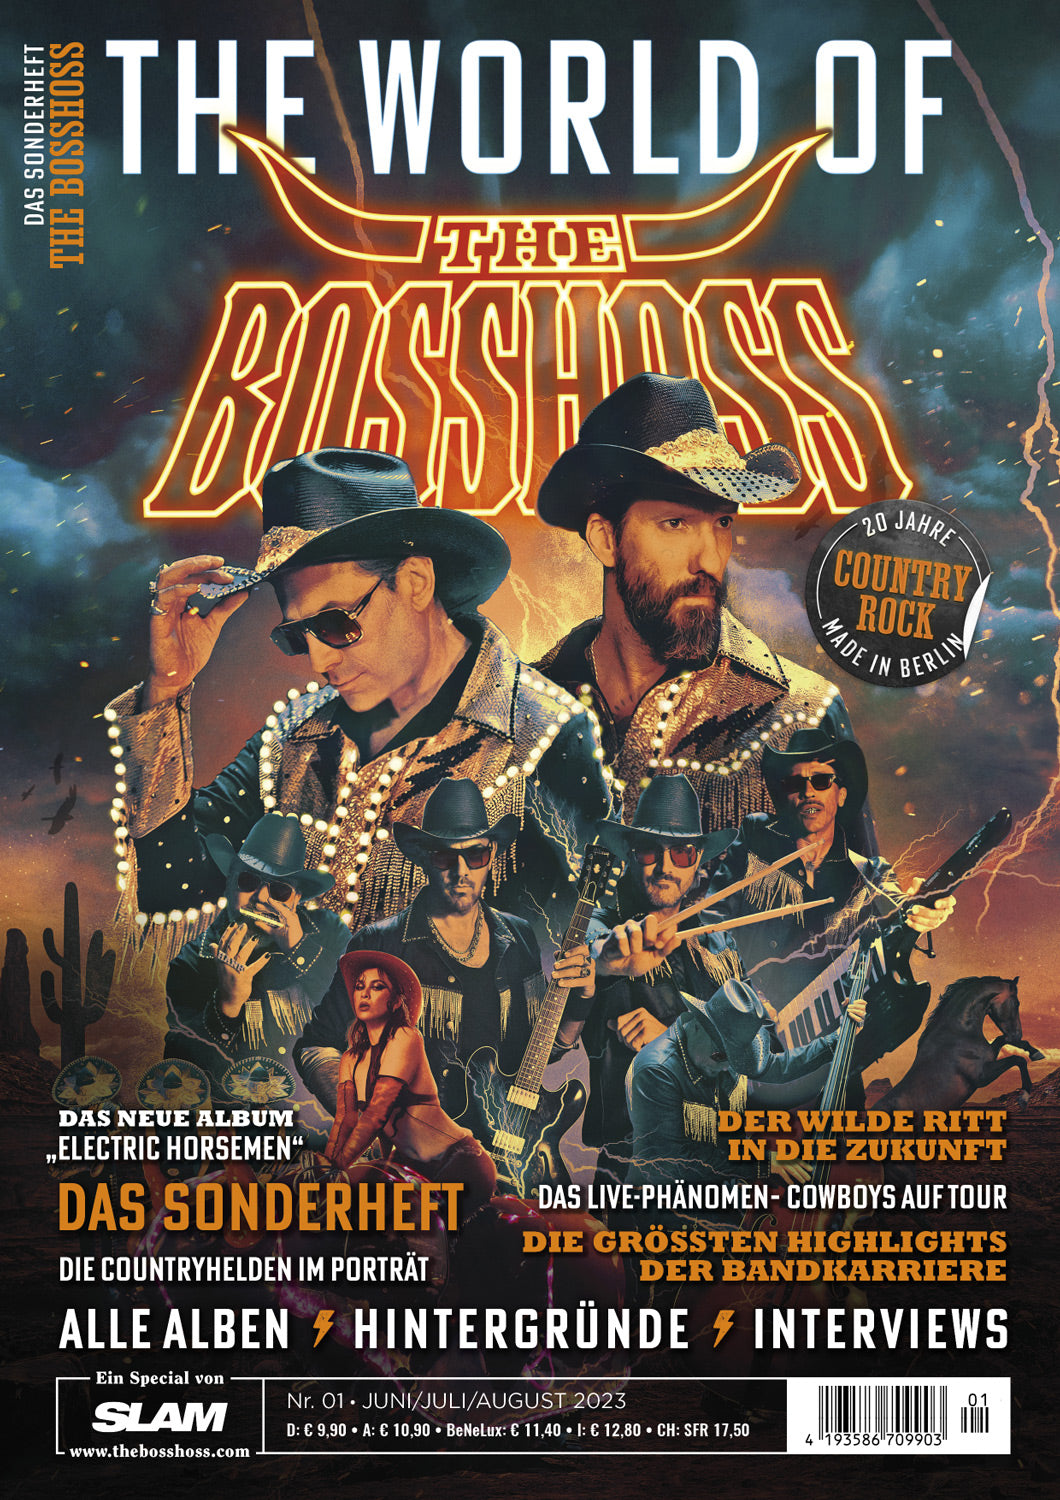 THE BOSSHOSS - Das Sonderheft